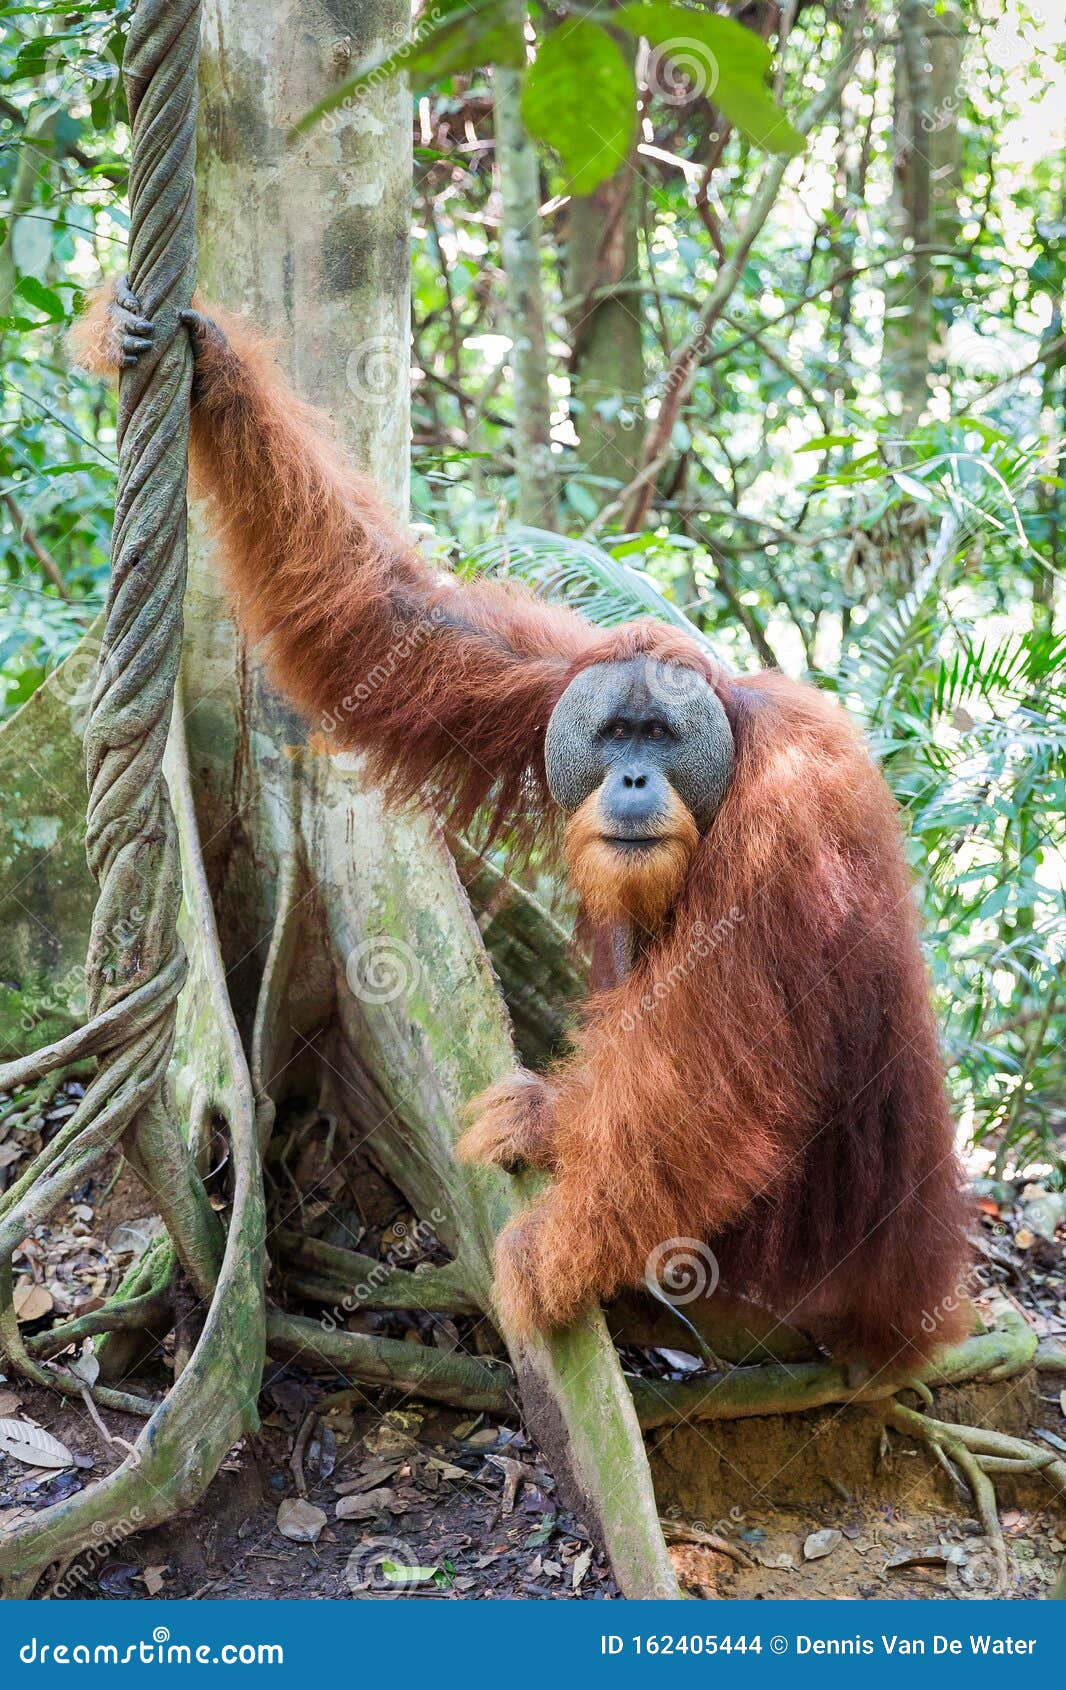  Wild Orangutan  looking stock photo Image of endangered 